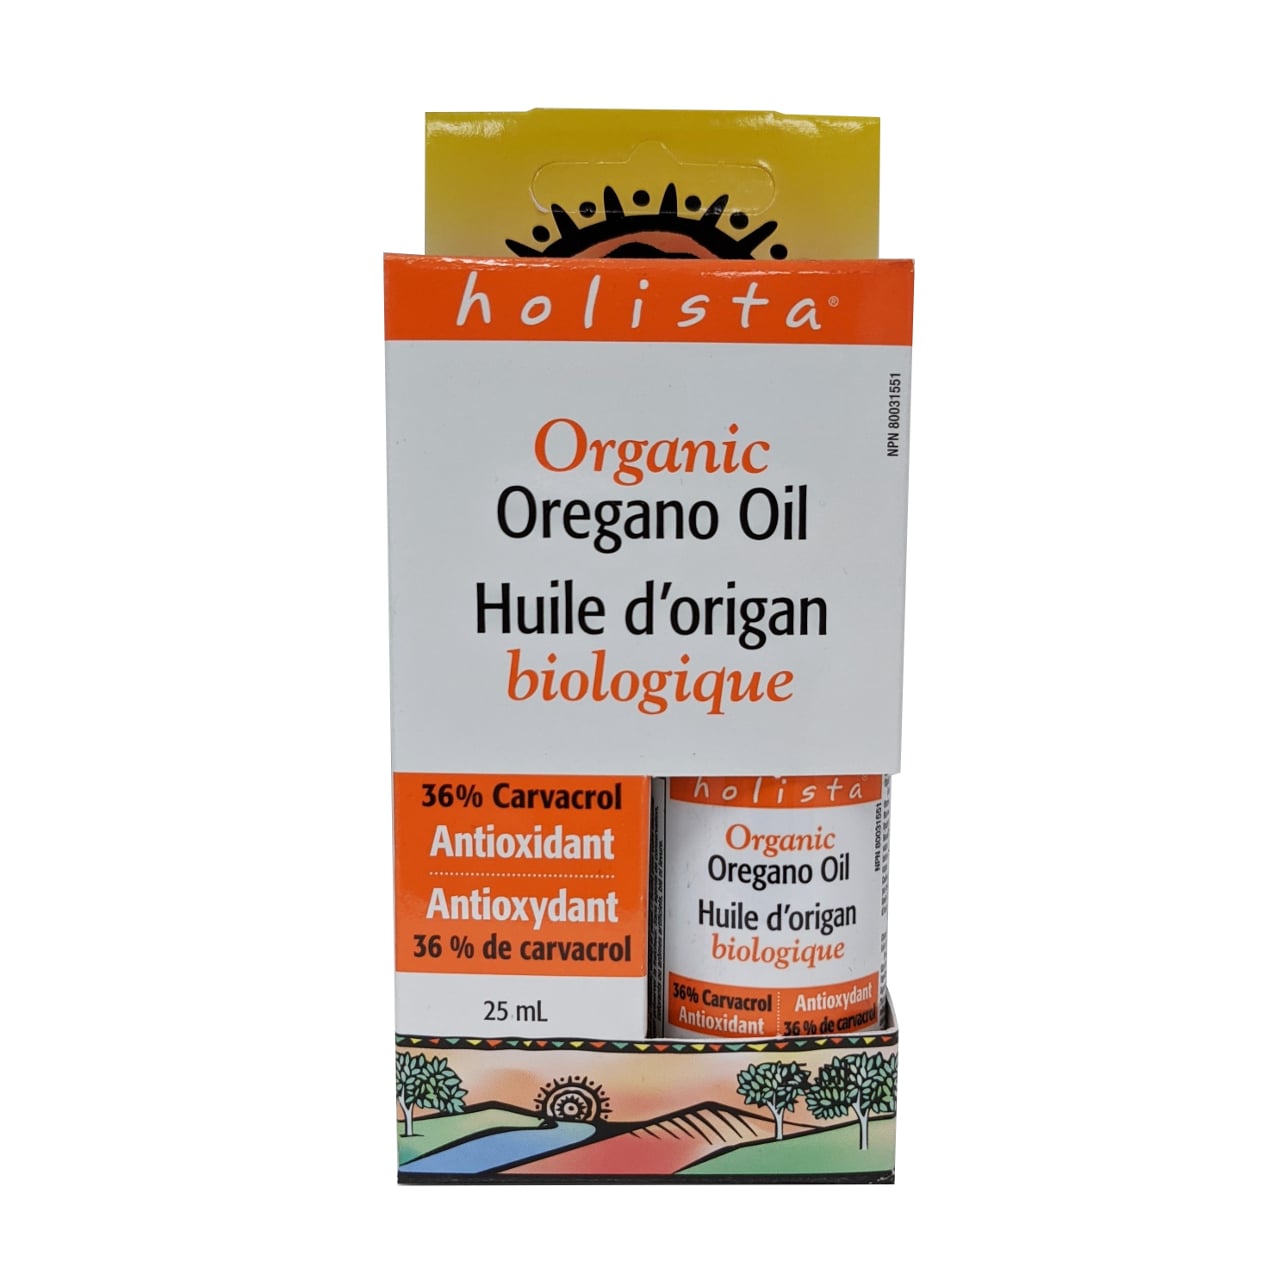 Product label for Holista Organic Oregano Oil Liquid 